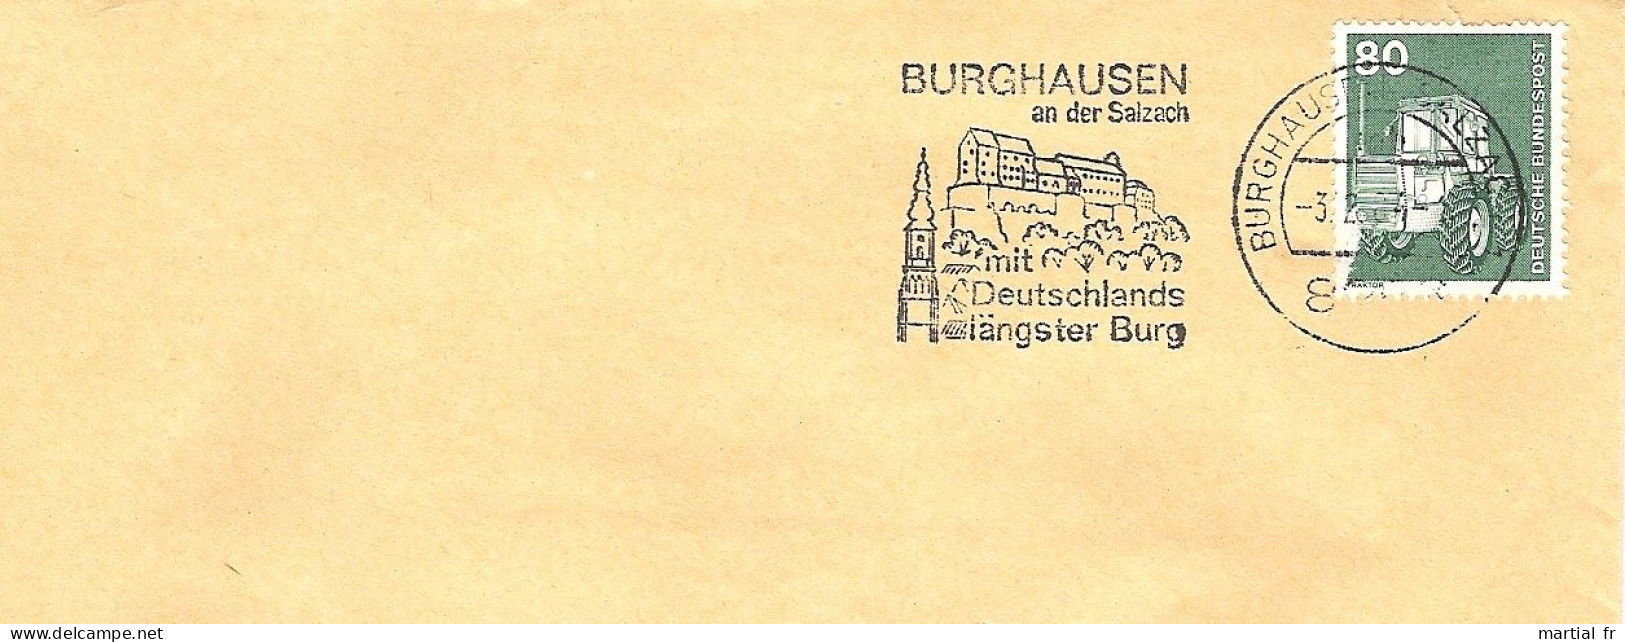 ALLEMAGNE DEUTSCHLAND GERMANY ARCHITECTURE CHATEAU FORT BURG CASTLE SCHLOSS FORTIFICATION Burghausen 8263 SALZACH - Castles